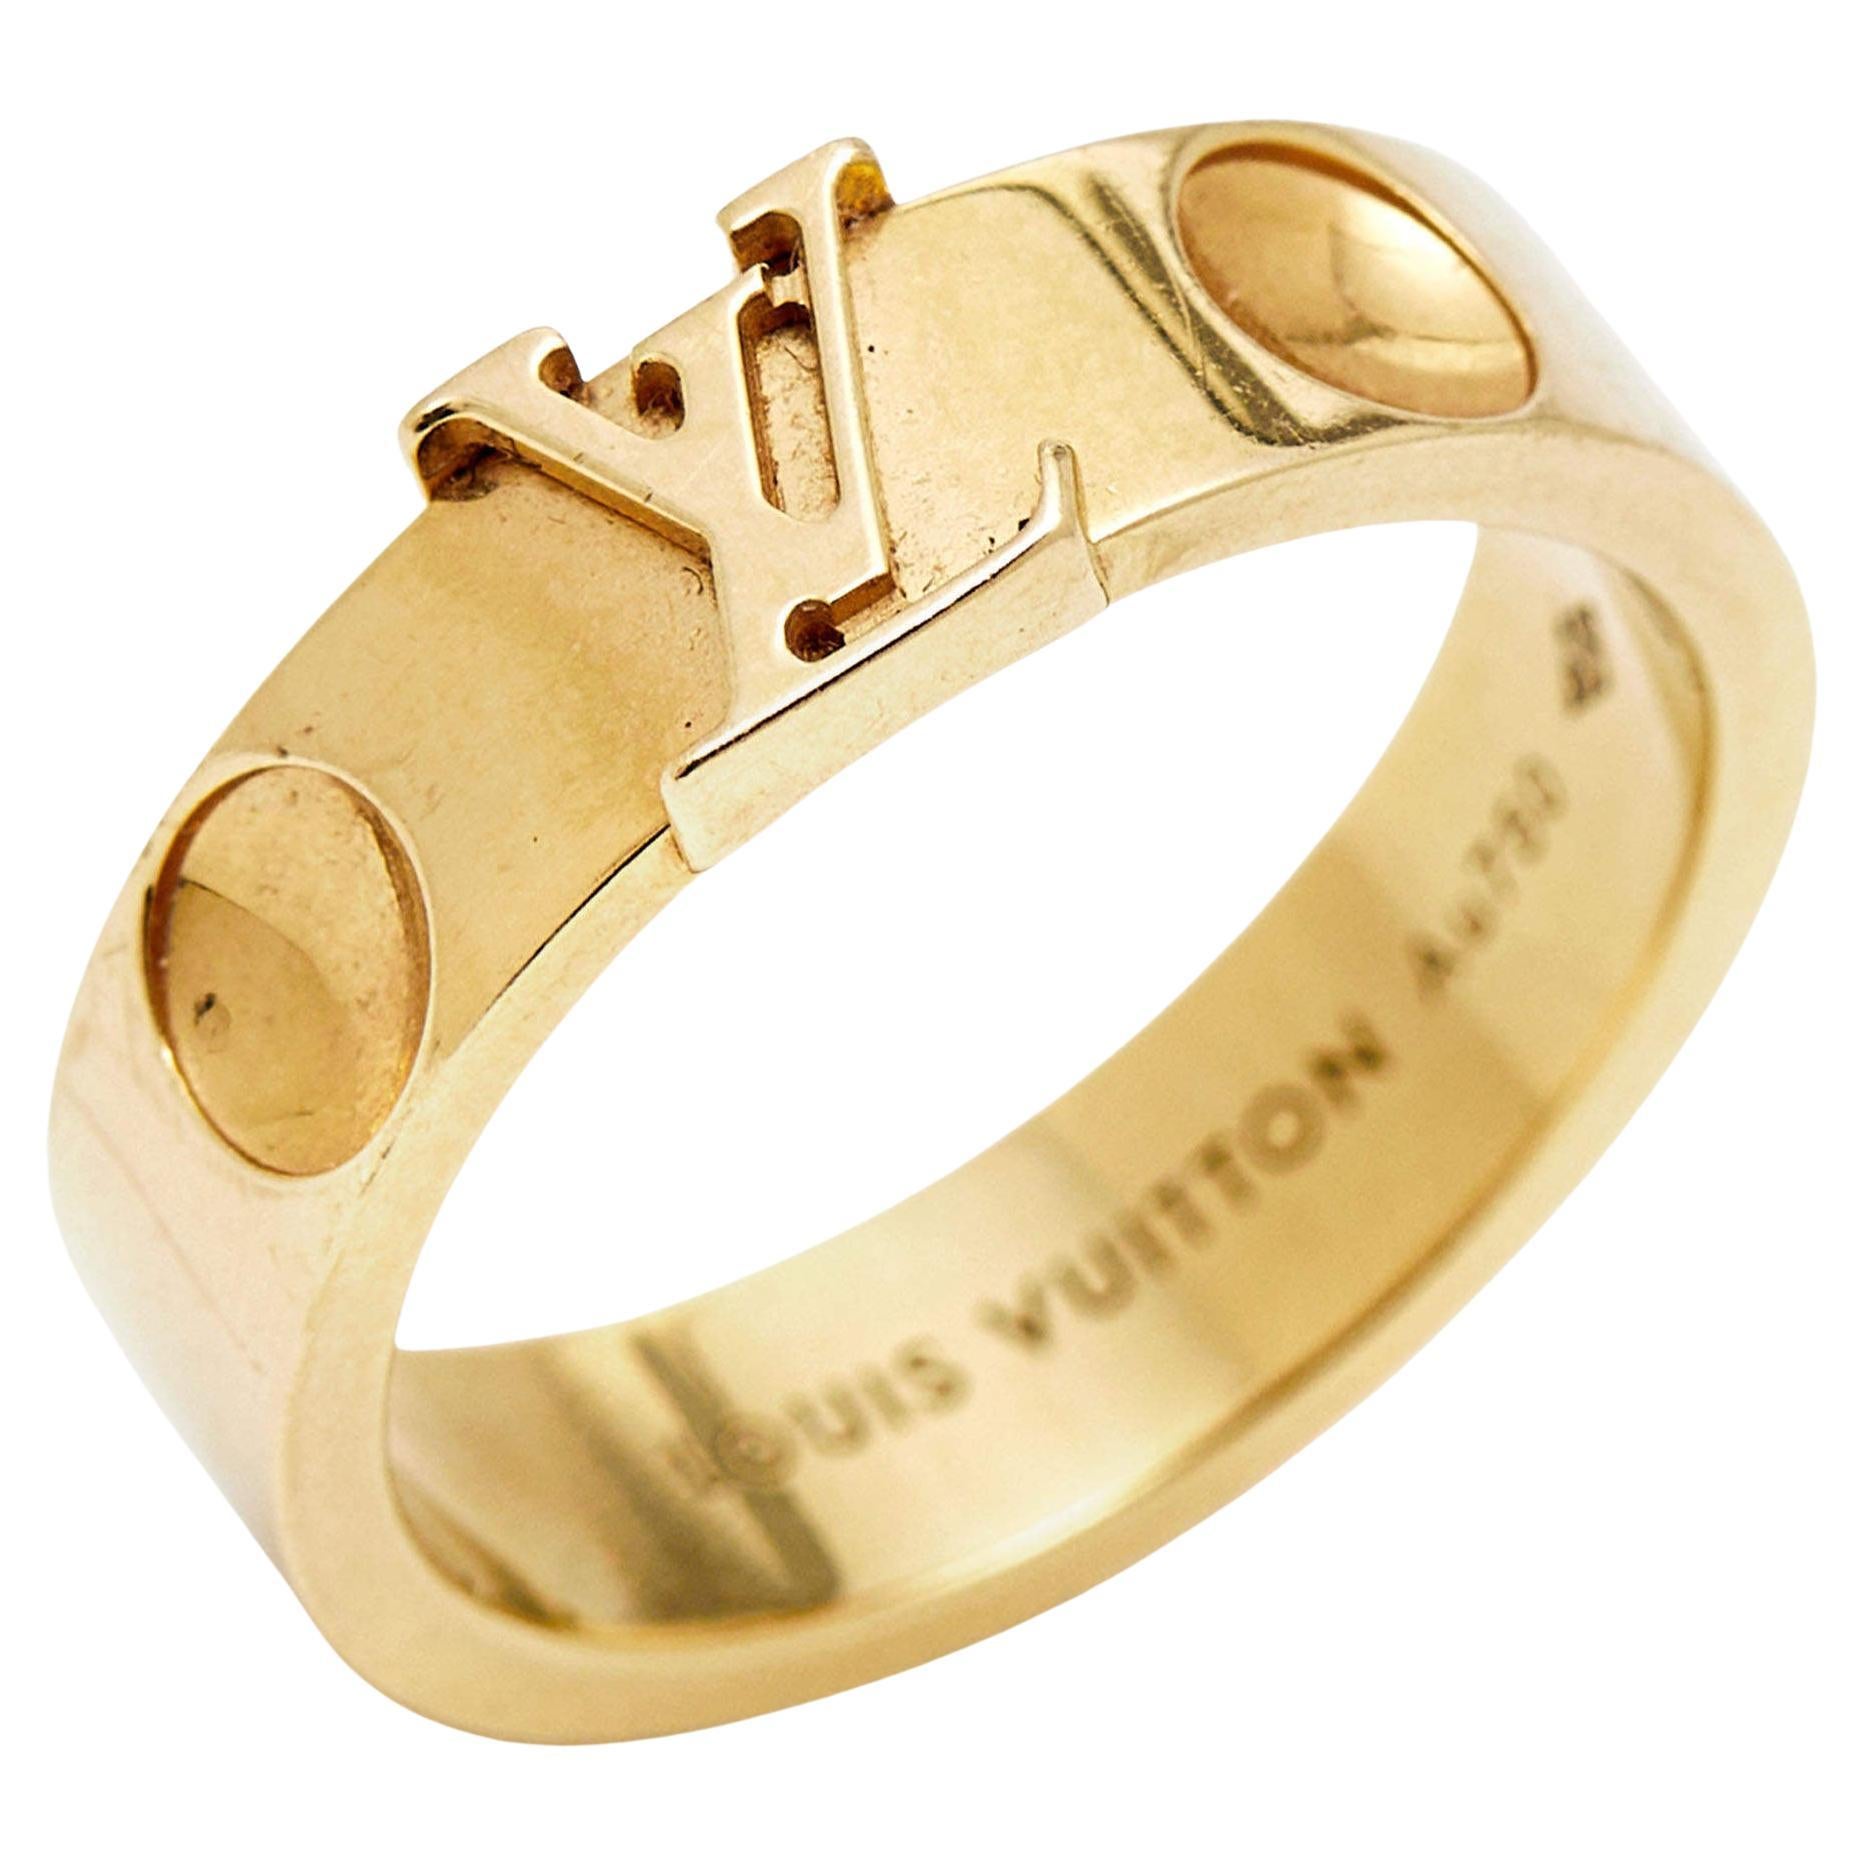 Louis Vuitton Empreinte 18k Yellow Gold Ring Size 52 For Sale